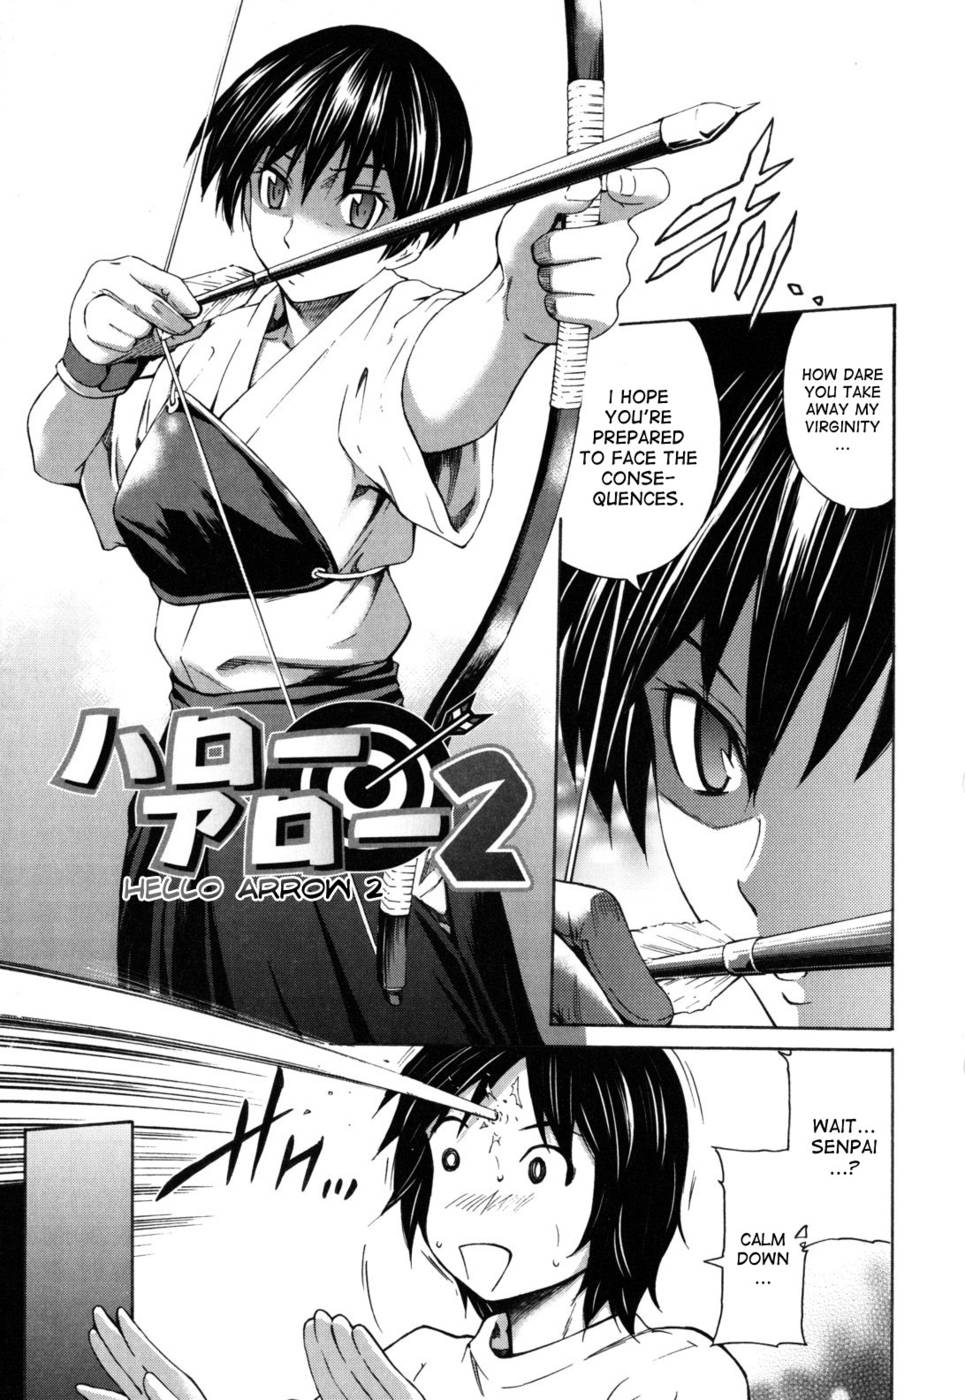 Hentai Manga Comic-Hajirai Body-Chapter 2-Hello Arrow-1